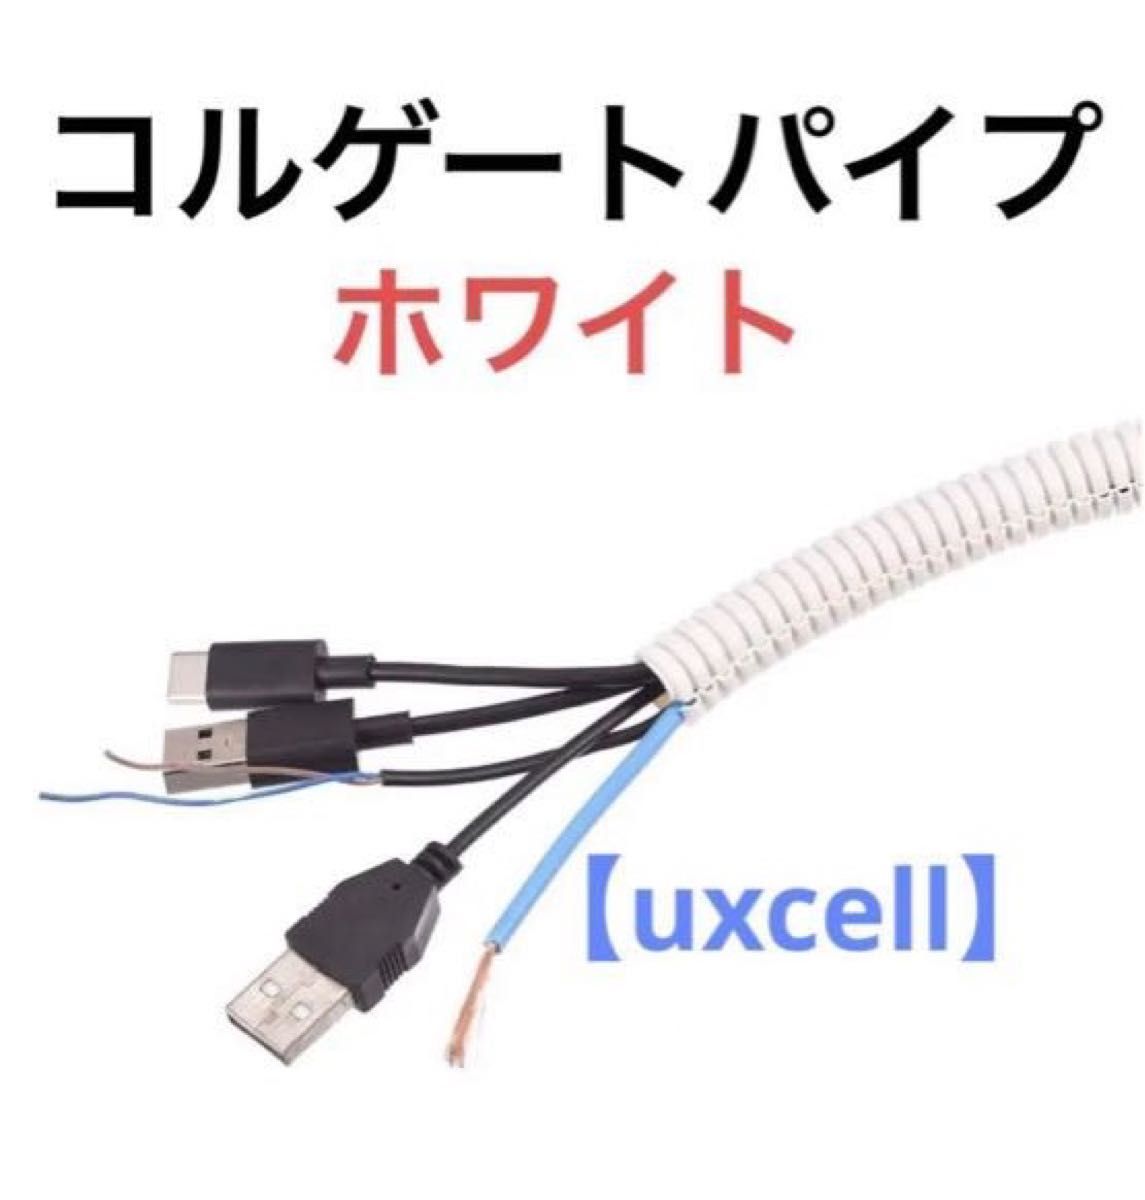 【uxcell】コルゲートパイプ(ホワイト)